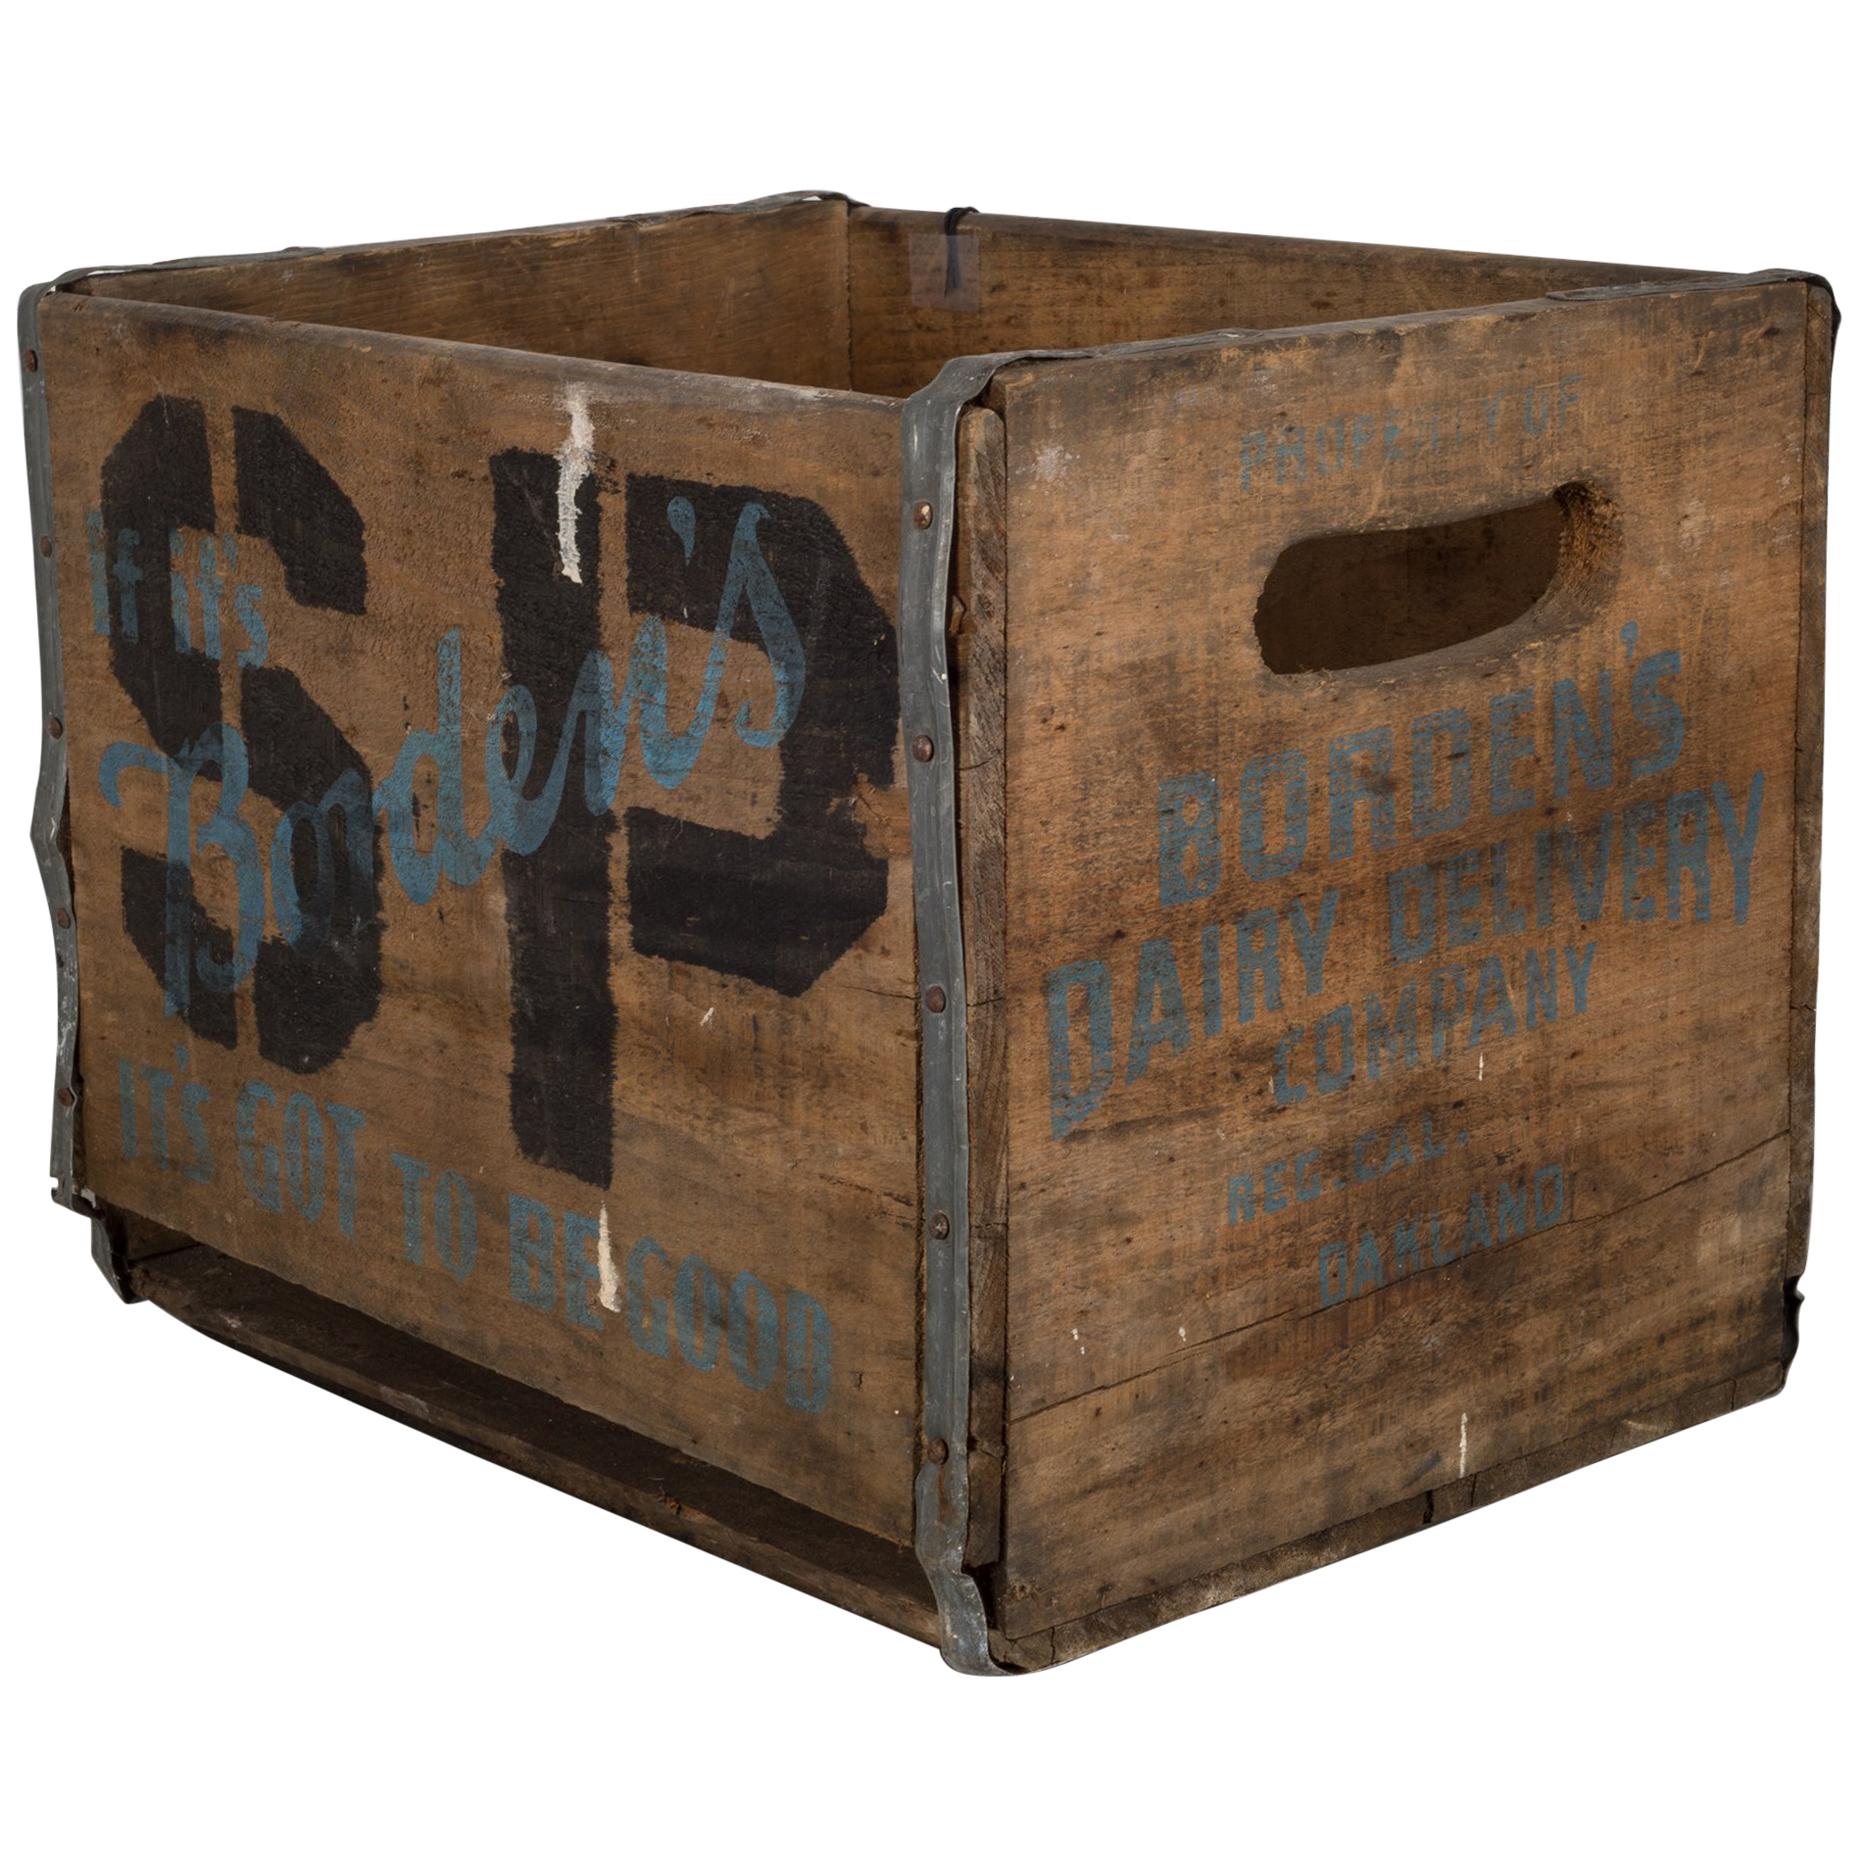 Bordon Dairy Wood and Metal Milk Crate, circa 1940